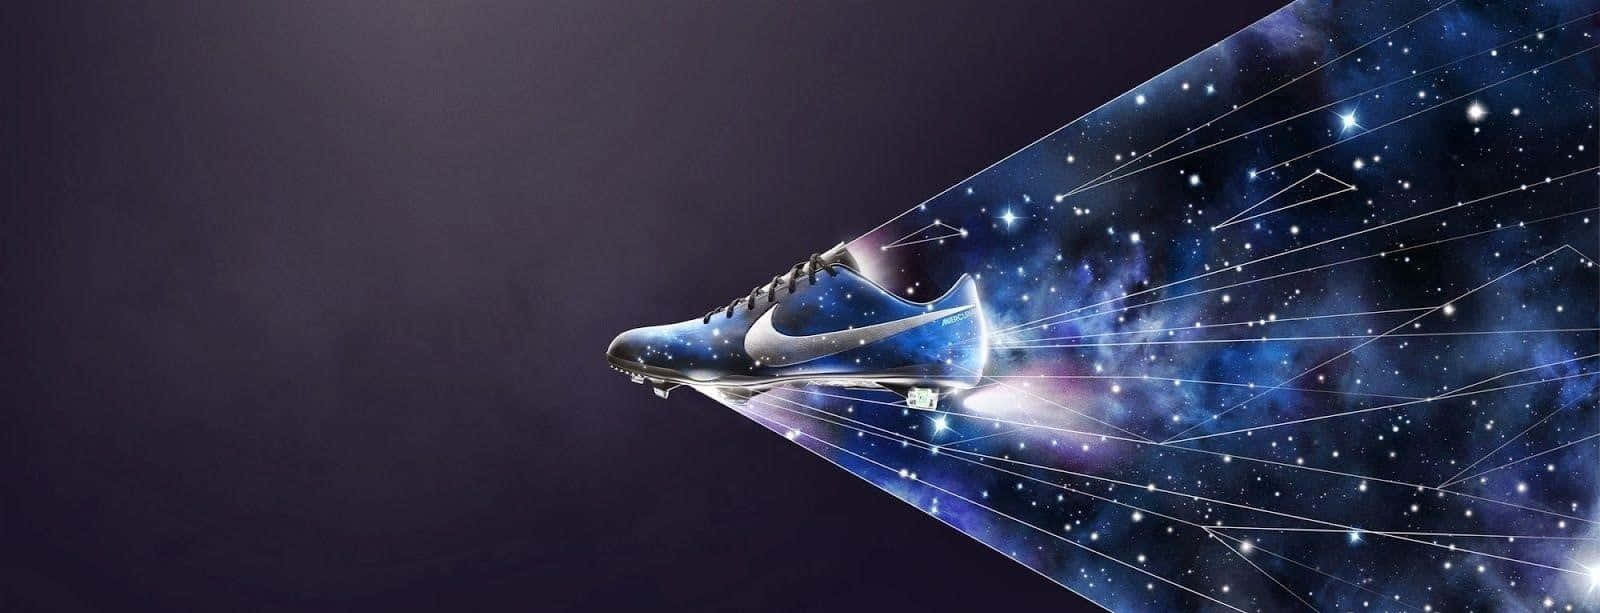 Mercurialvapor Nike Design Astratto Galaxy Sfondo